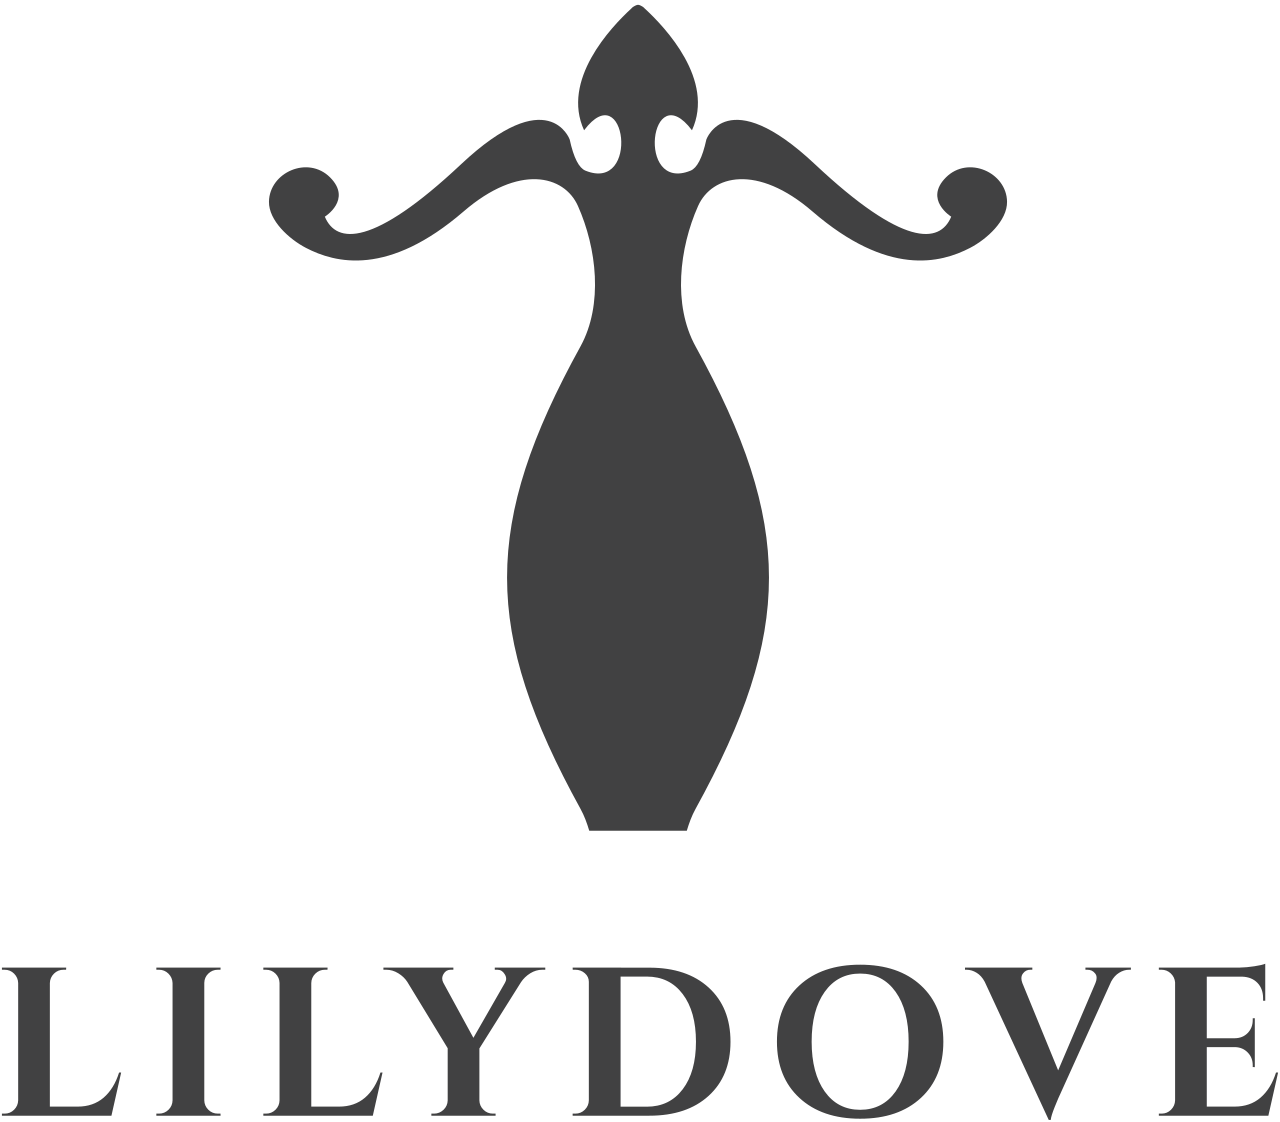 lilydove's logo